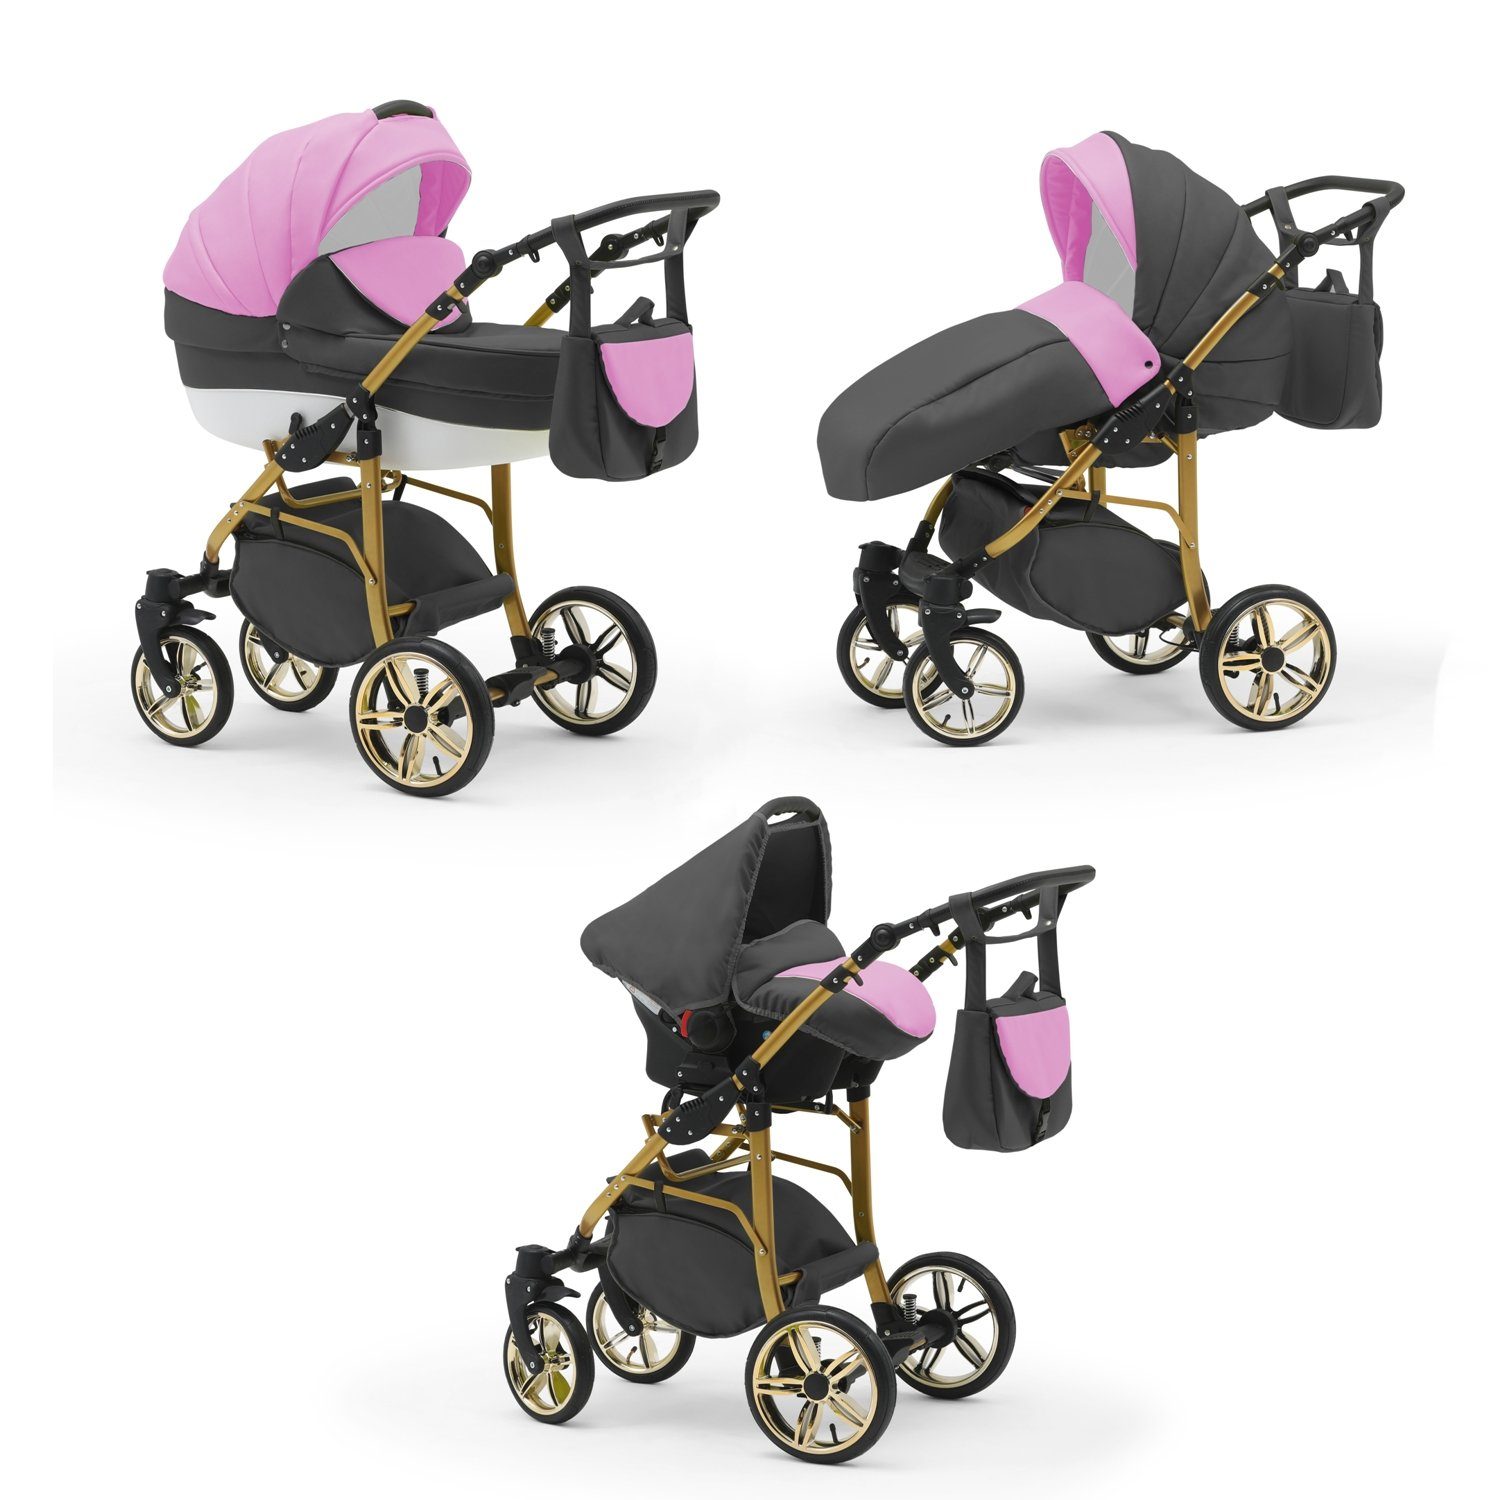 Farben in ECO Cosmo 46 Kombi-Kinderwagen 16 - - Pink-Grau-Weiß 3 babies-on-wheels Kinderwagen-Set Gold 1 Teile in